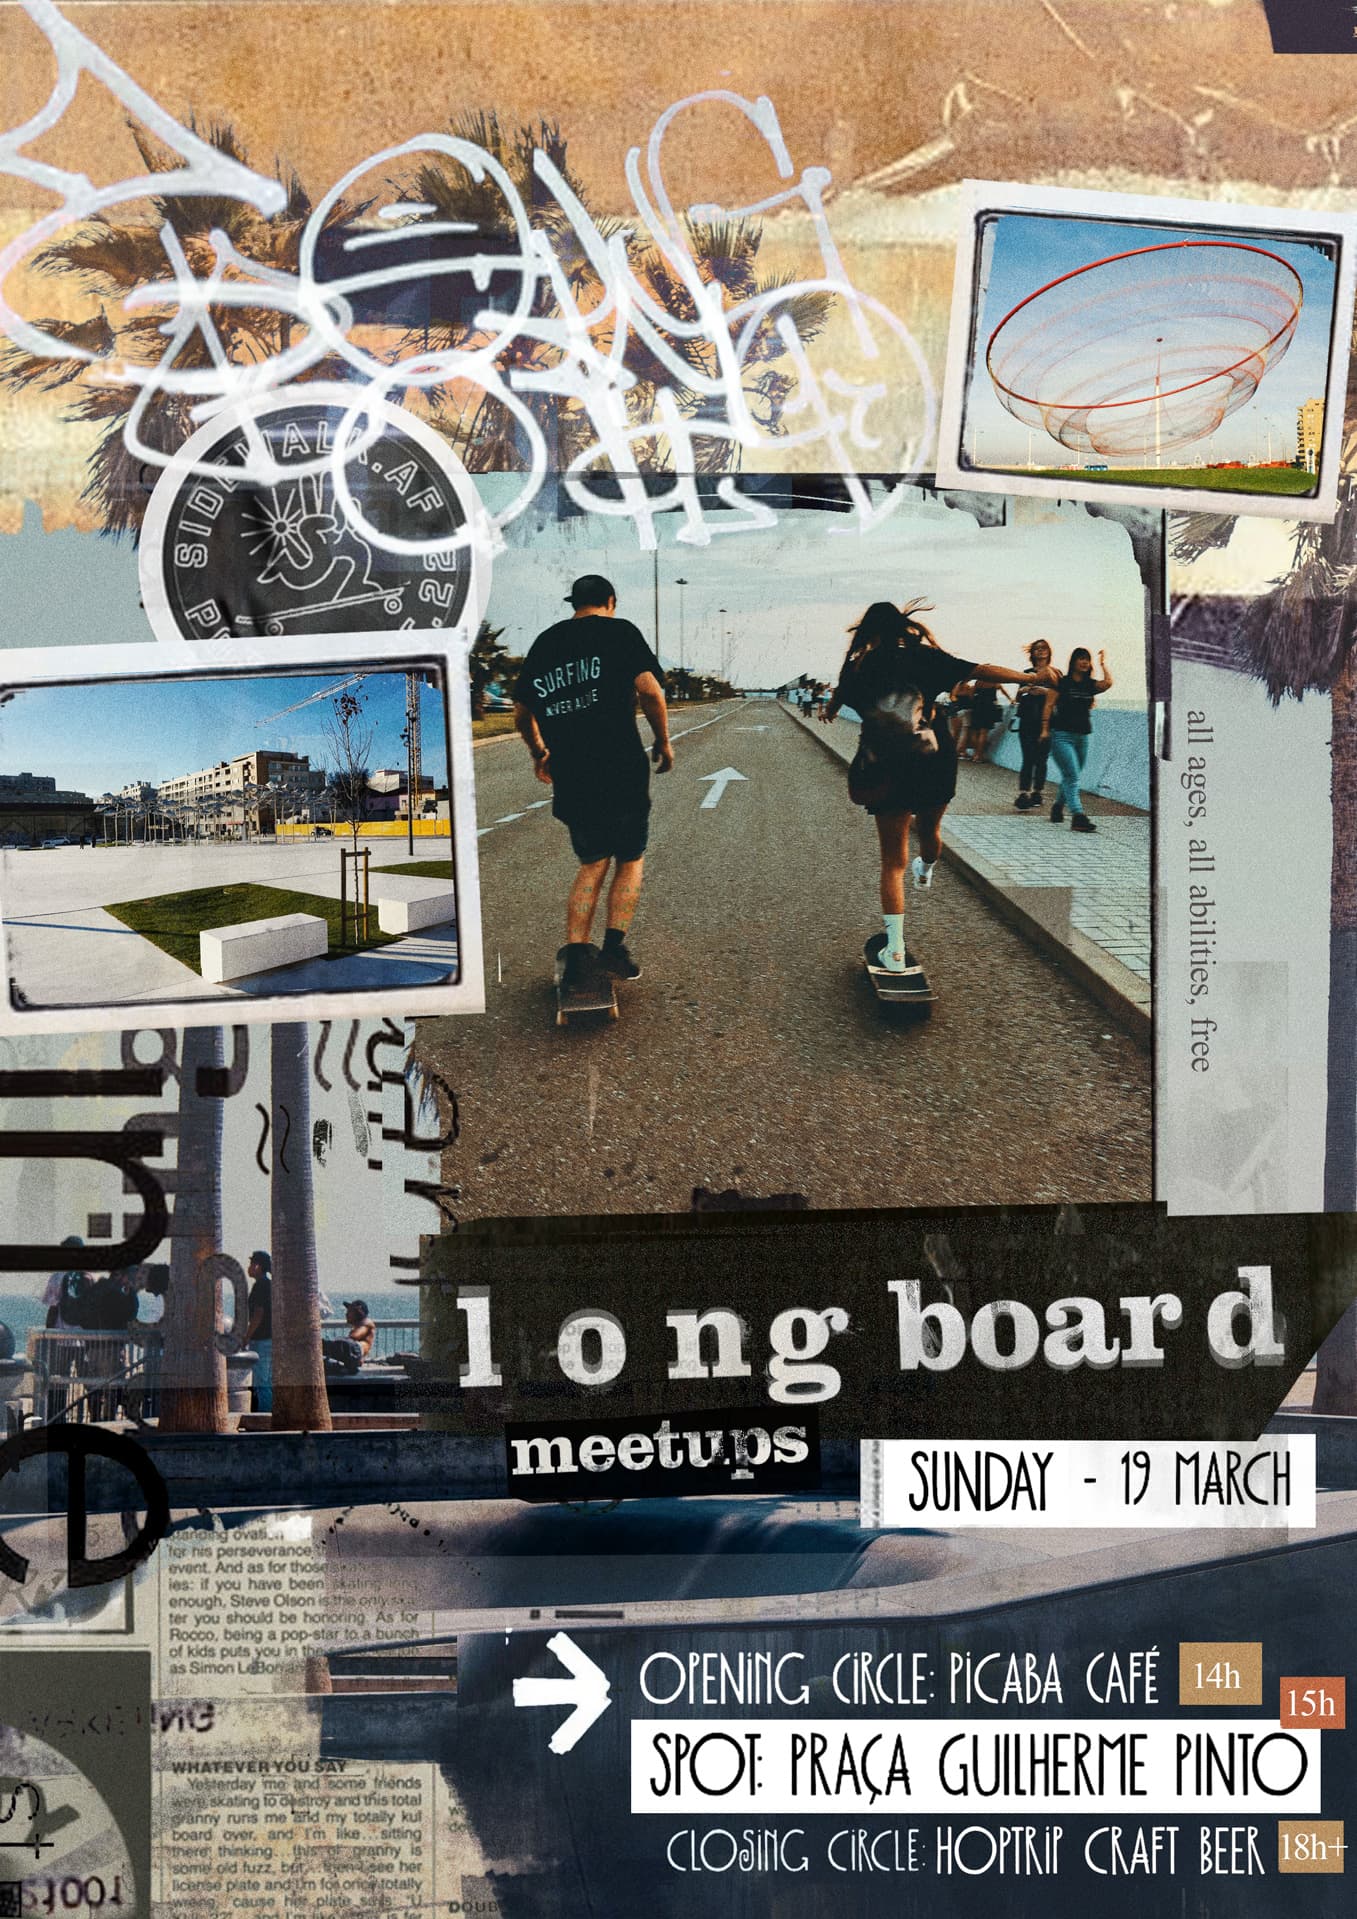 Longboard Skate Meetups - Sunday, March 19th